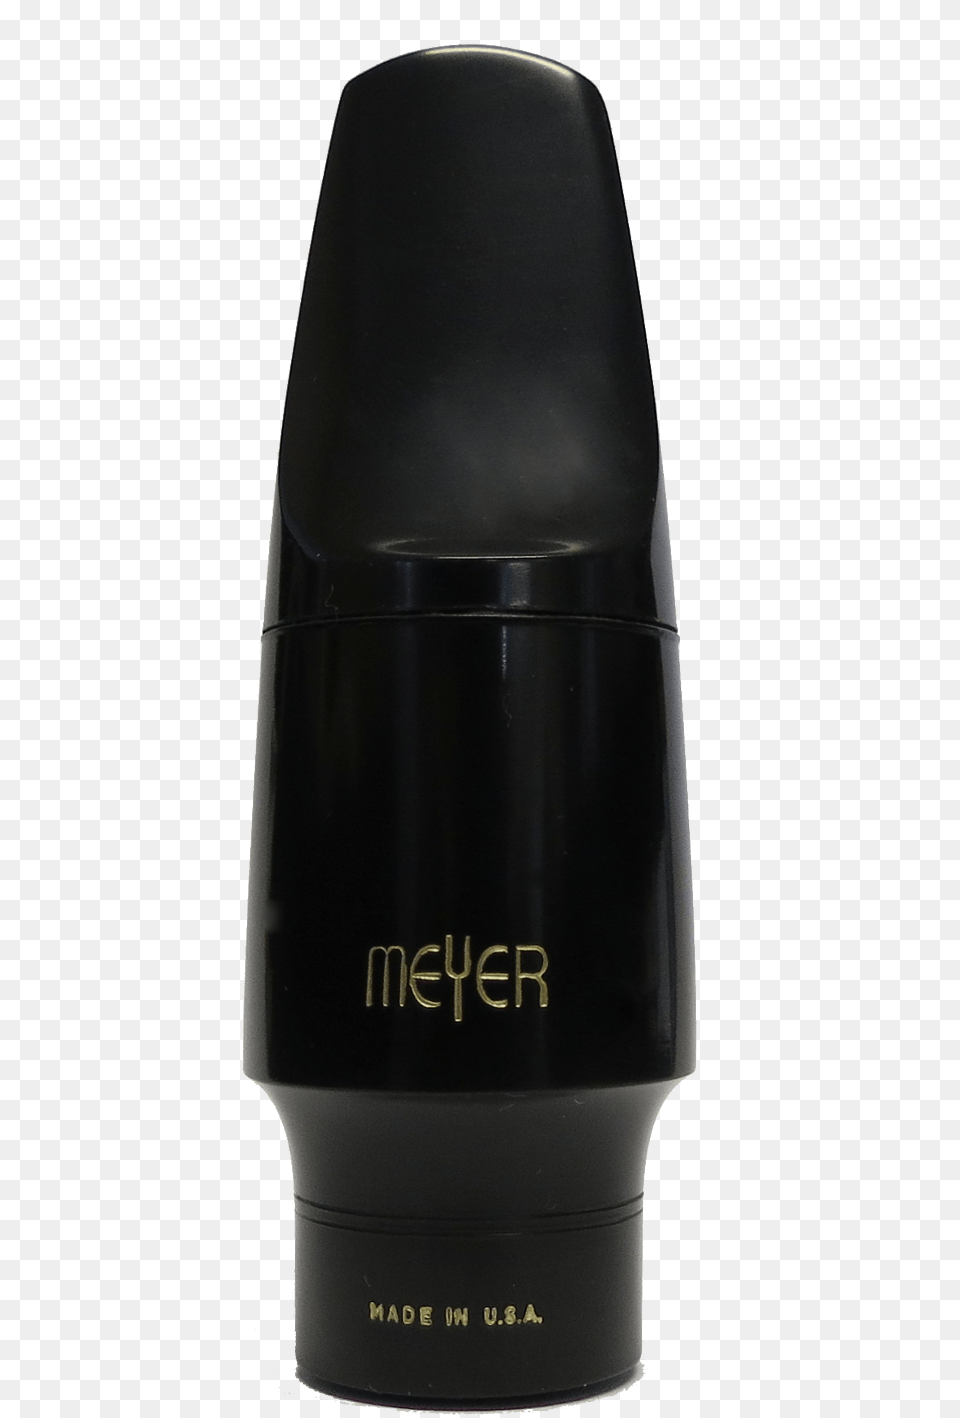 Meyer Hard Rubber Alto Saxophone Mouthpiece, Cosmetics, Electronics Png Image